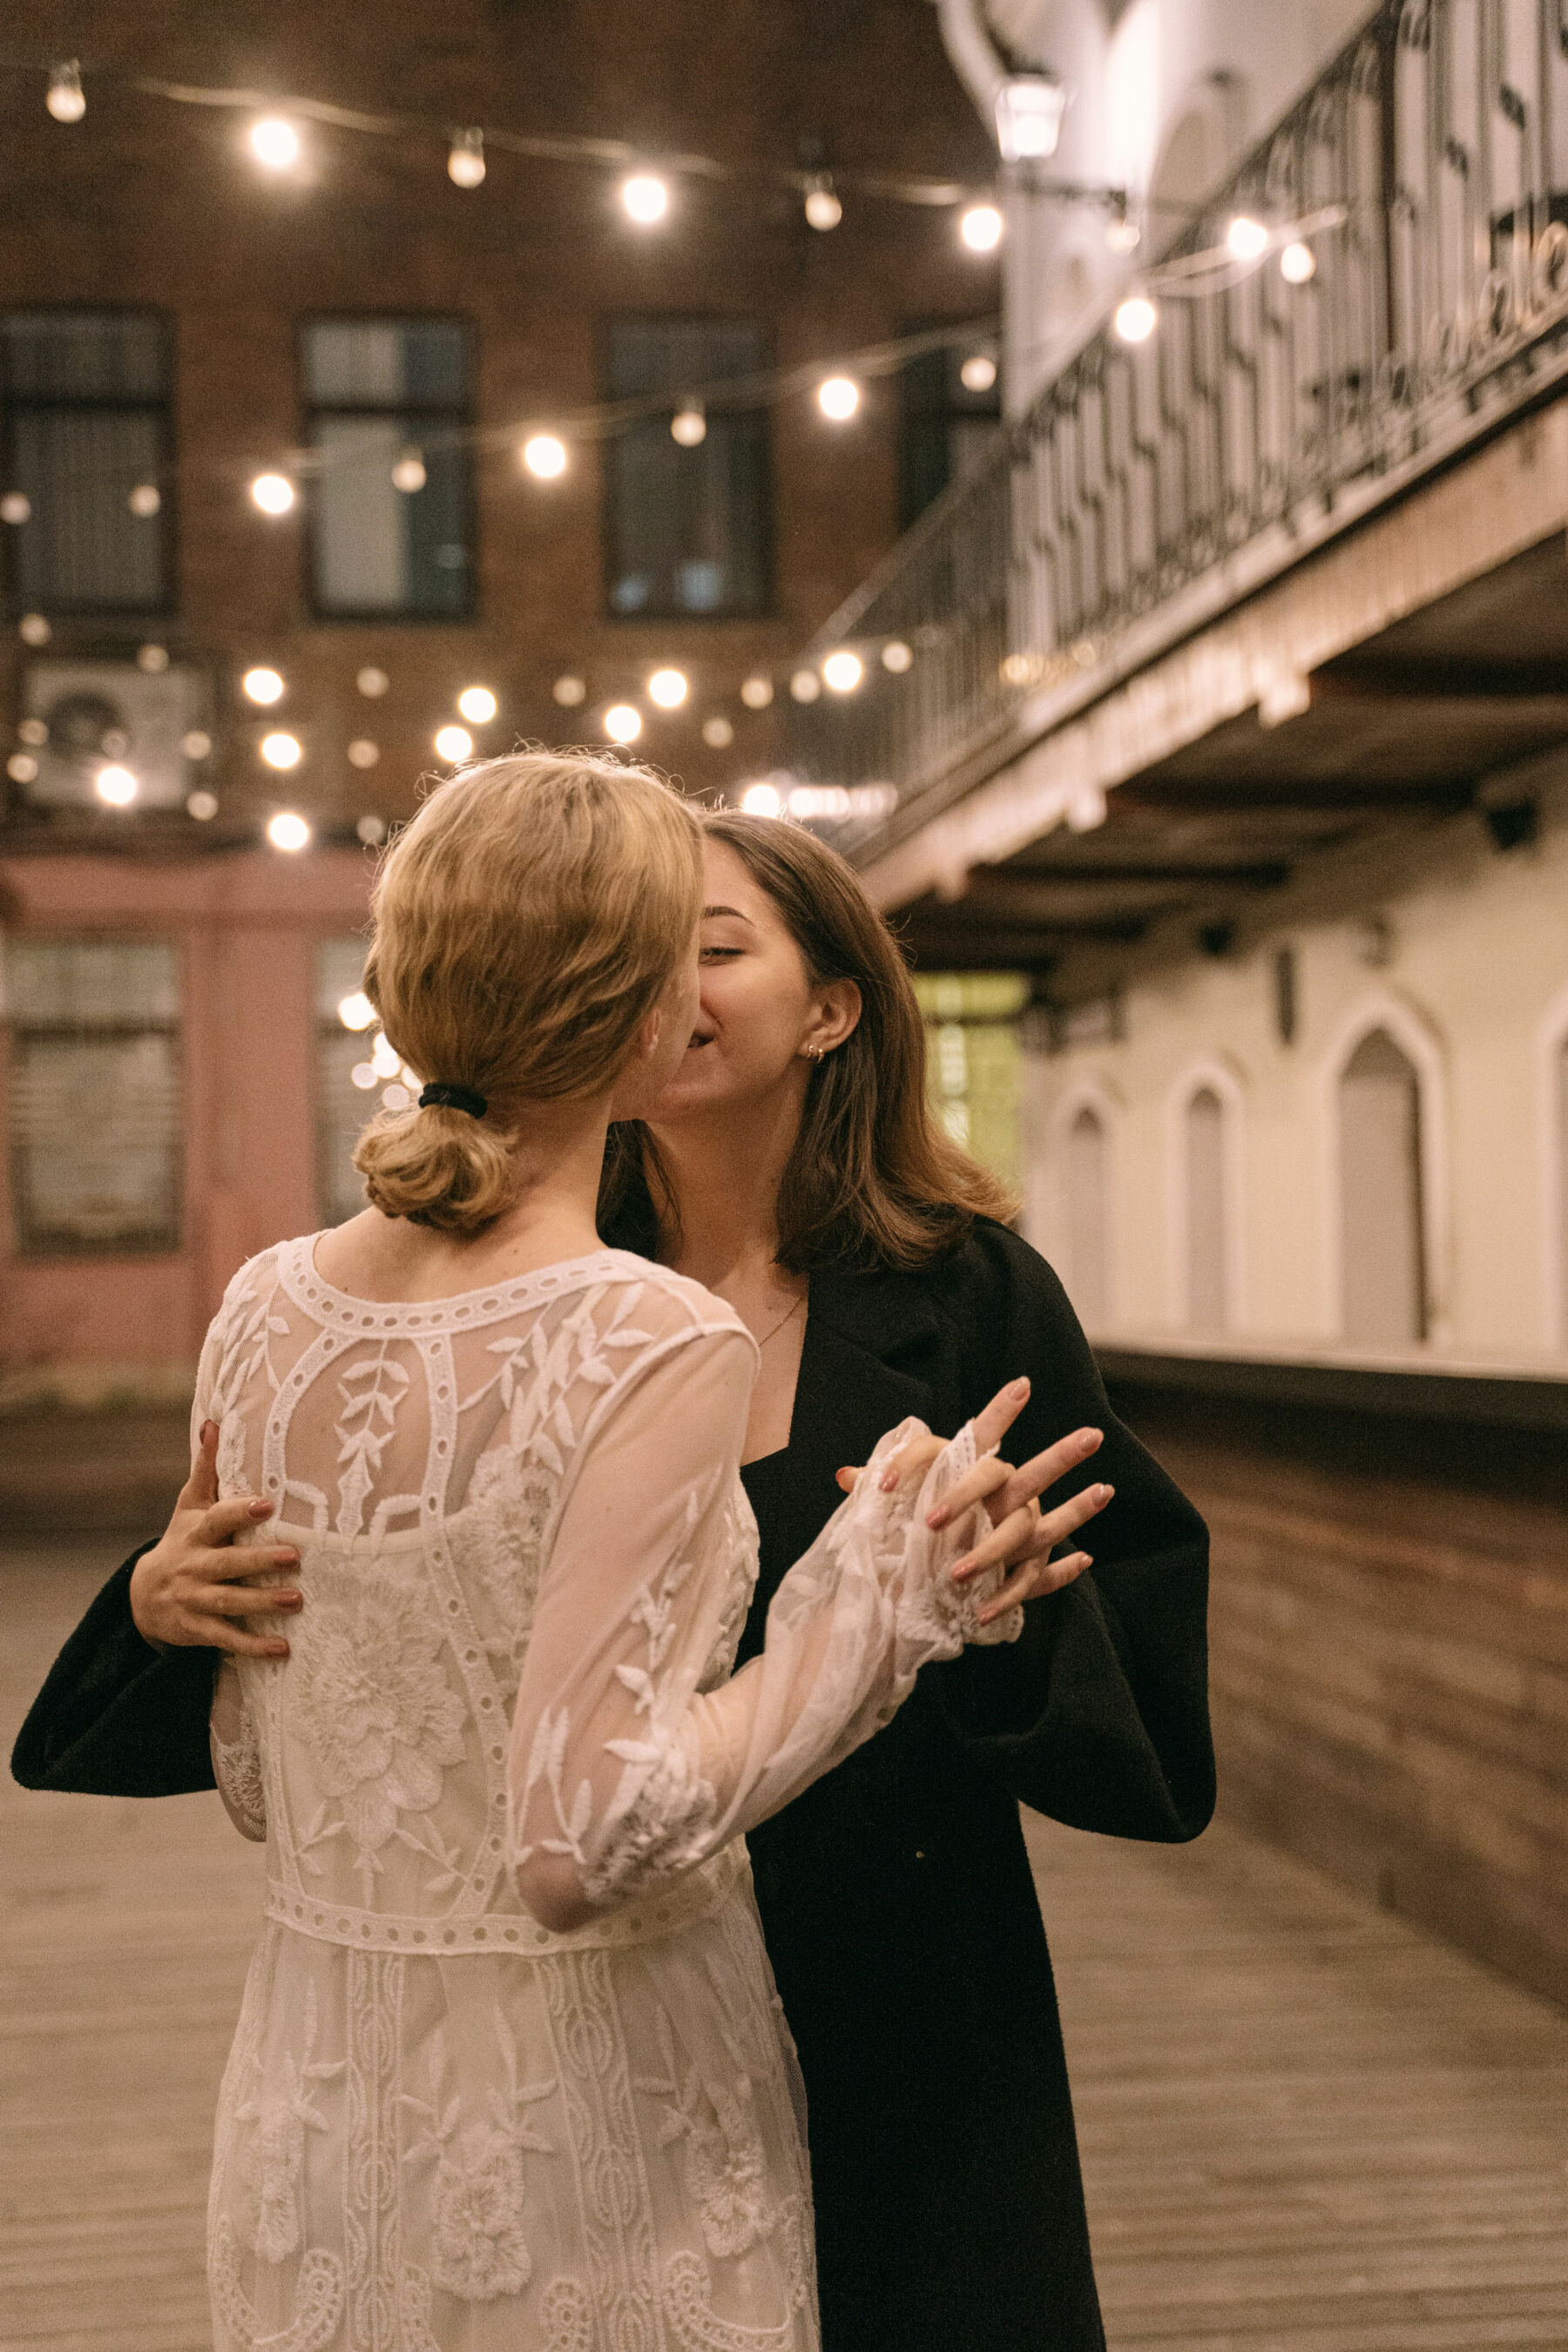 Lesbian couple kissing on their wedding day: Patchwork alternative wedding gift ideas